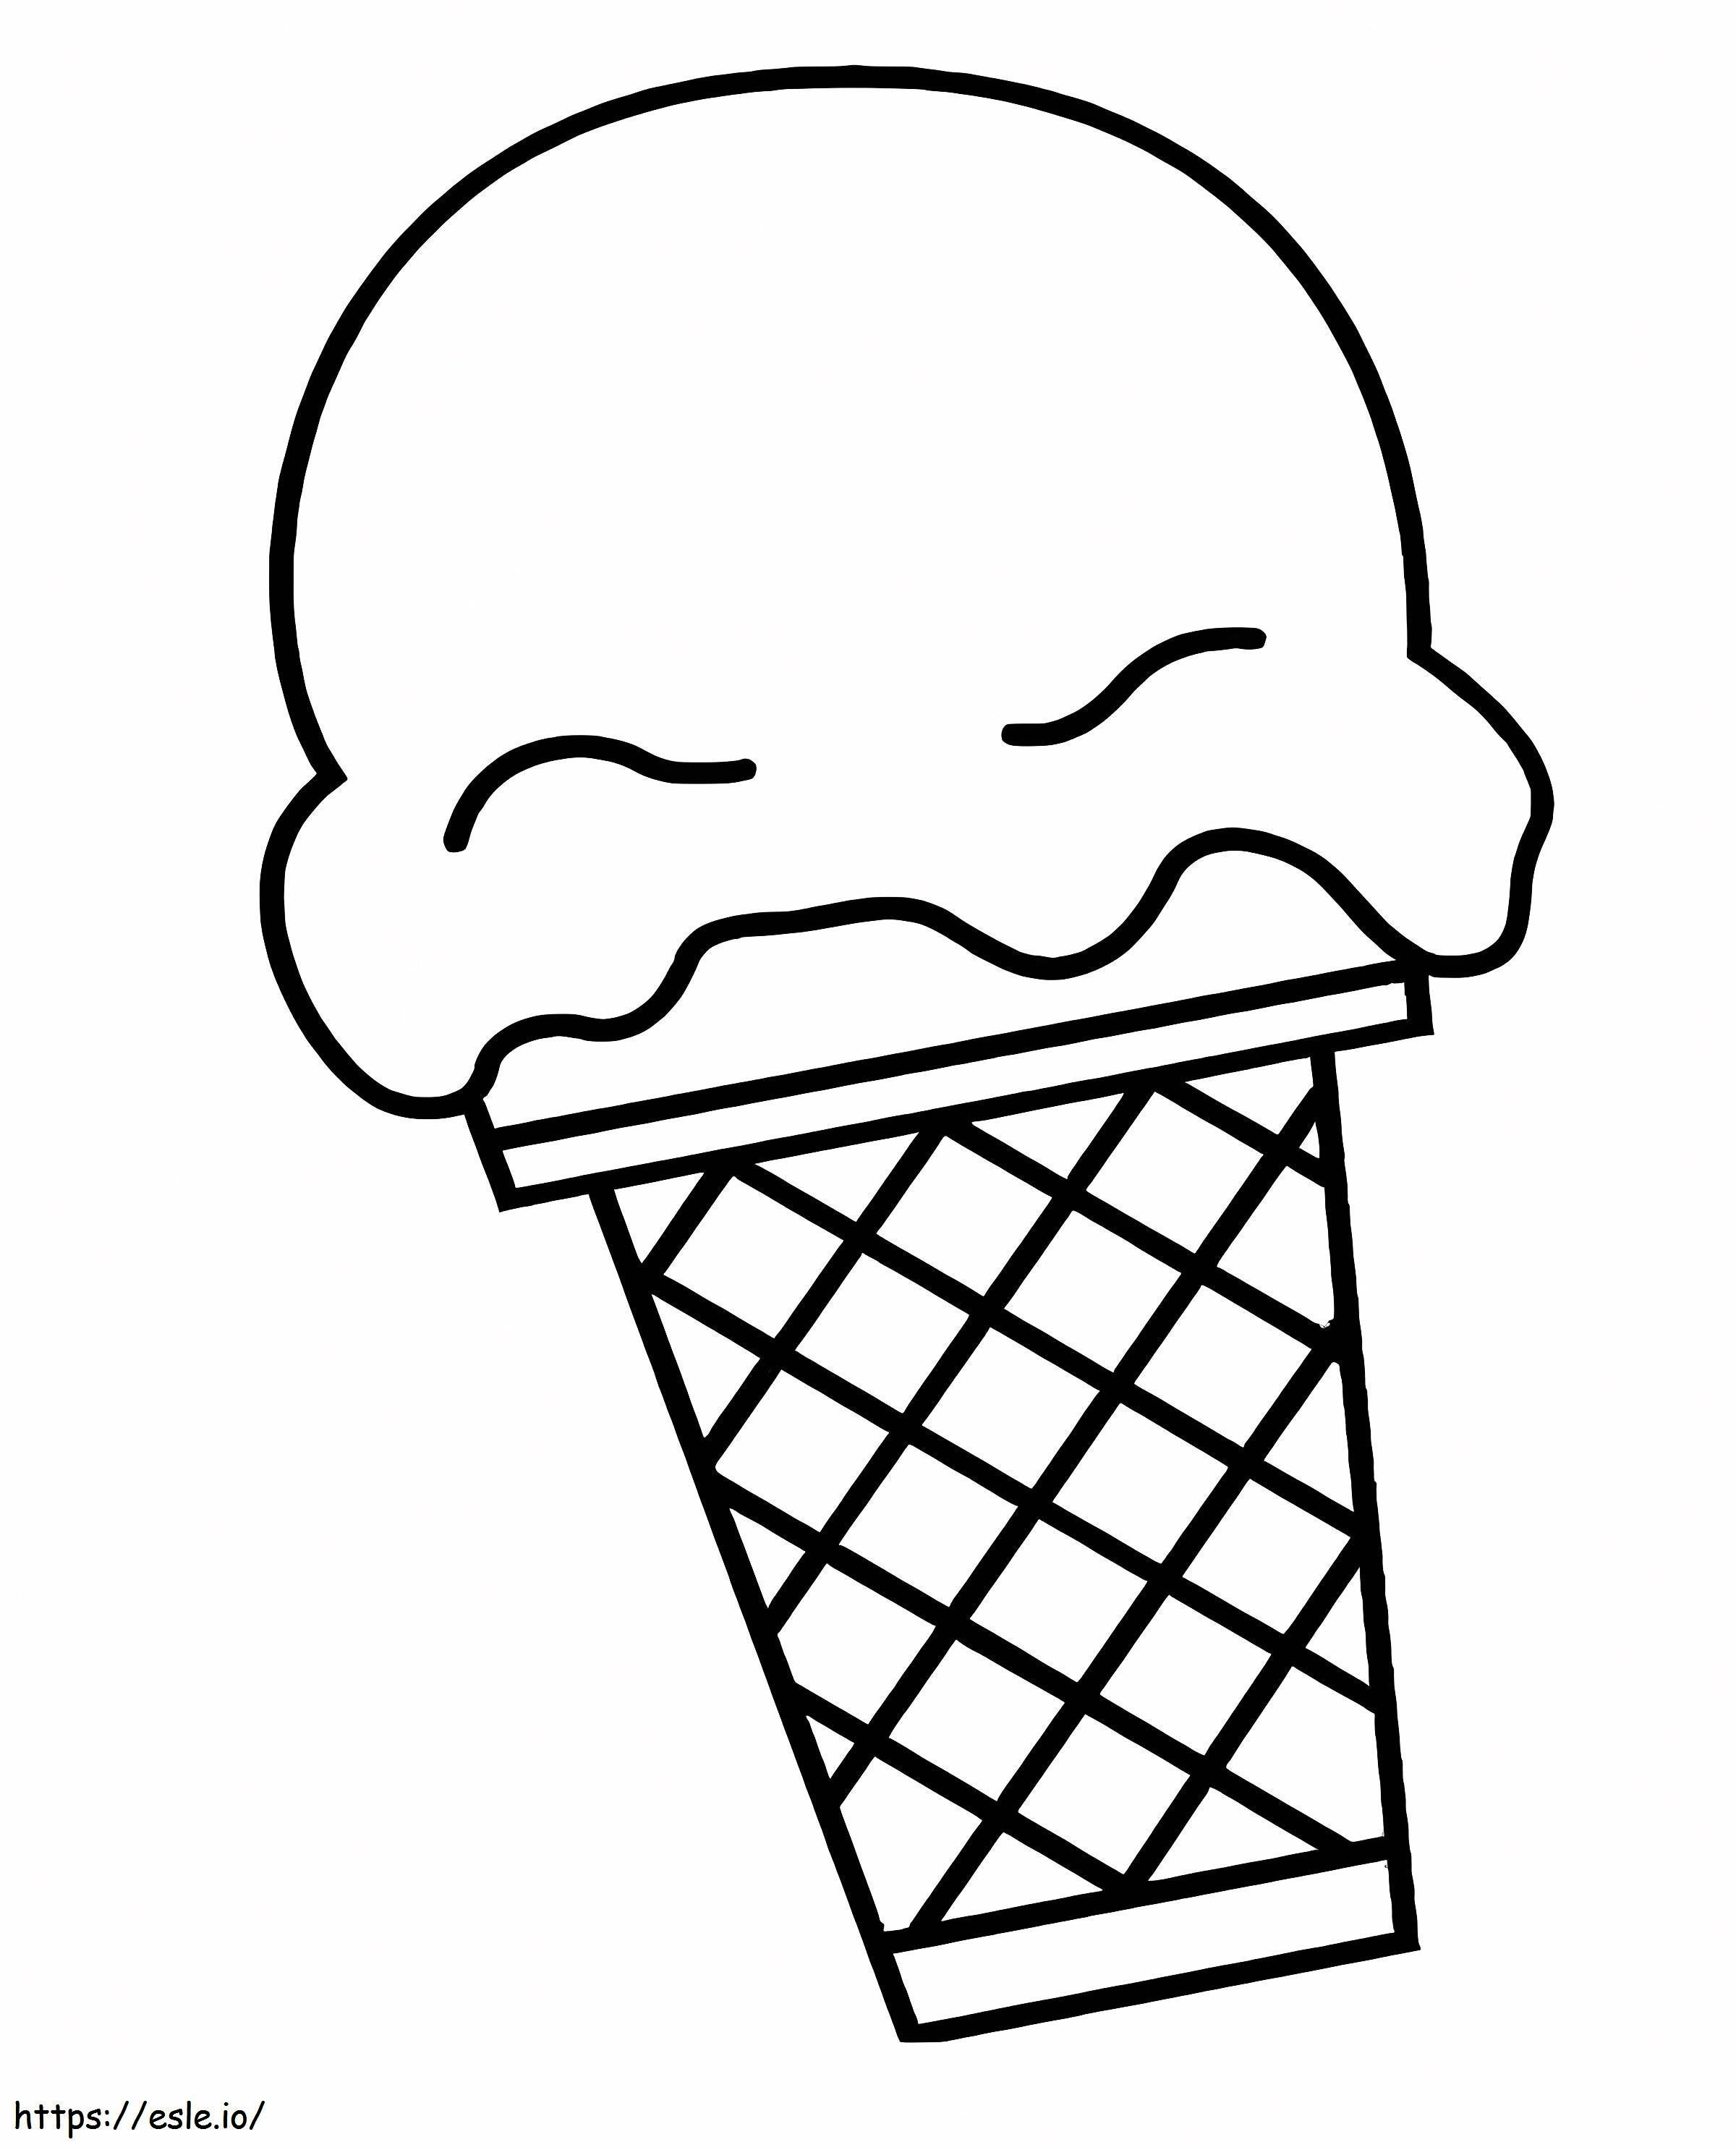 Ice Cream Cone To Color coloring page